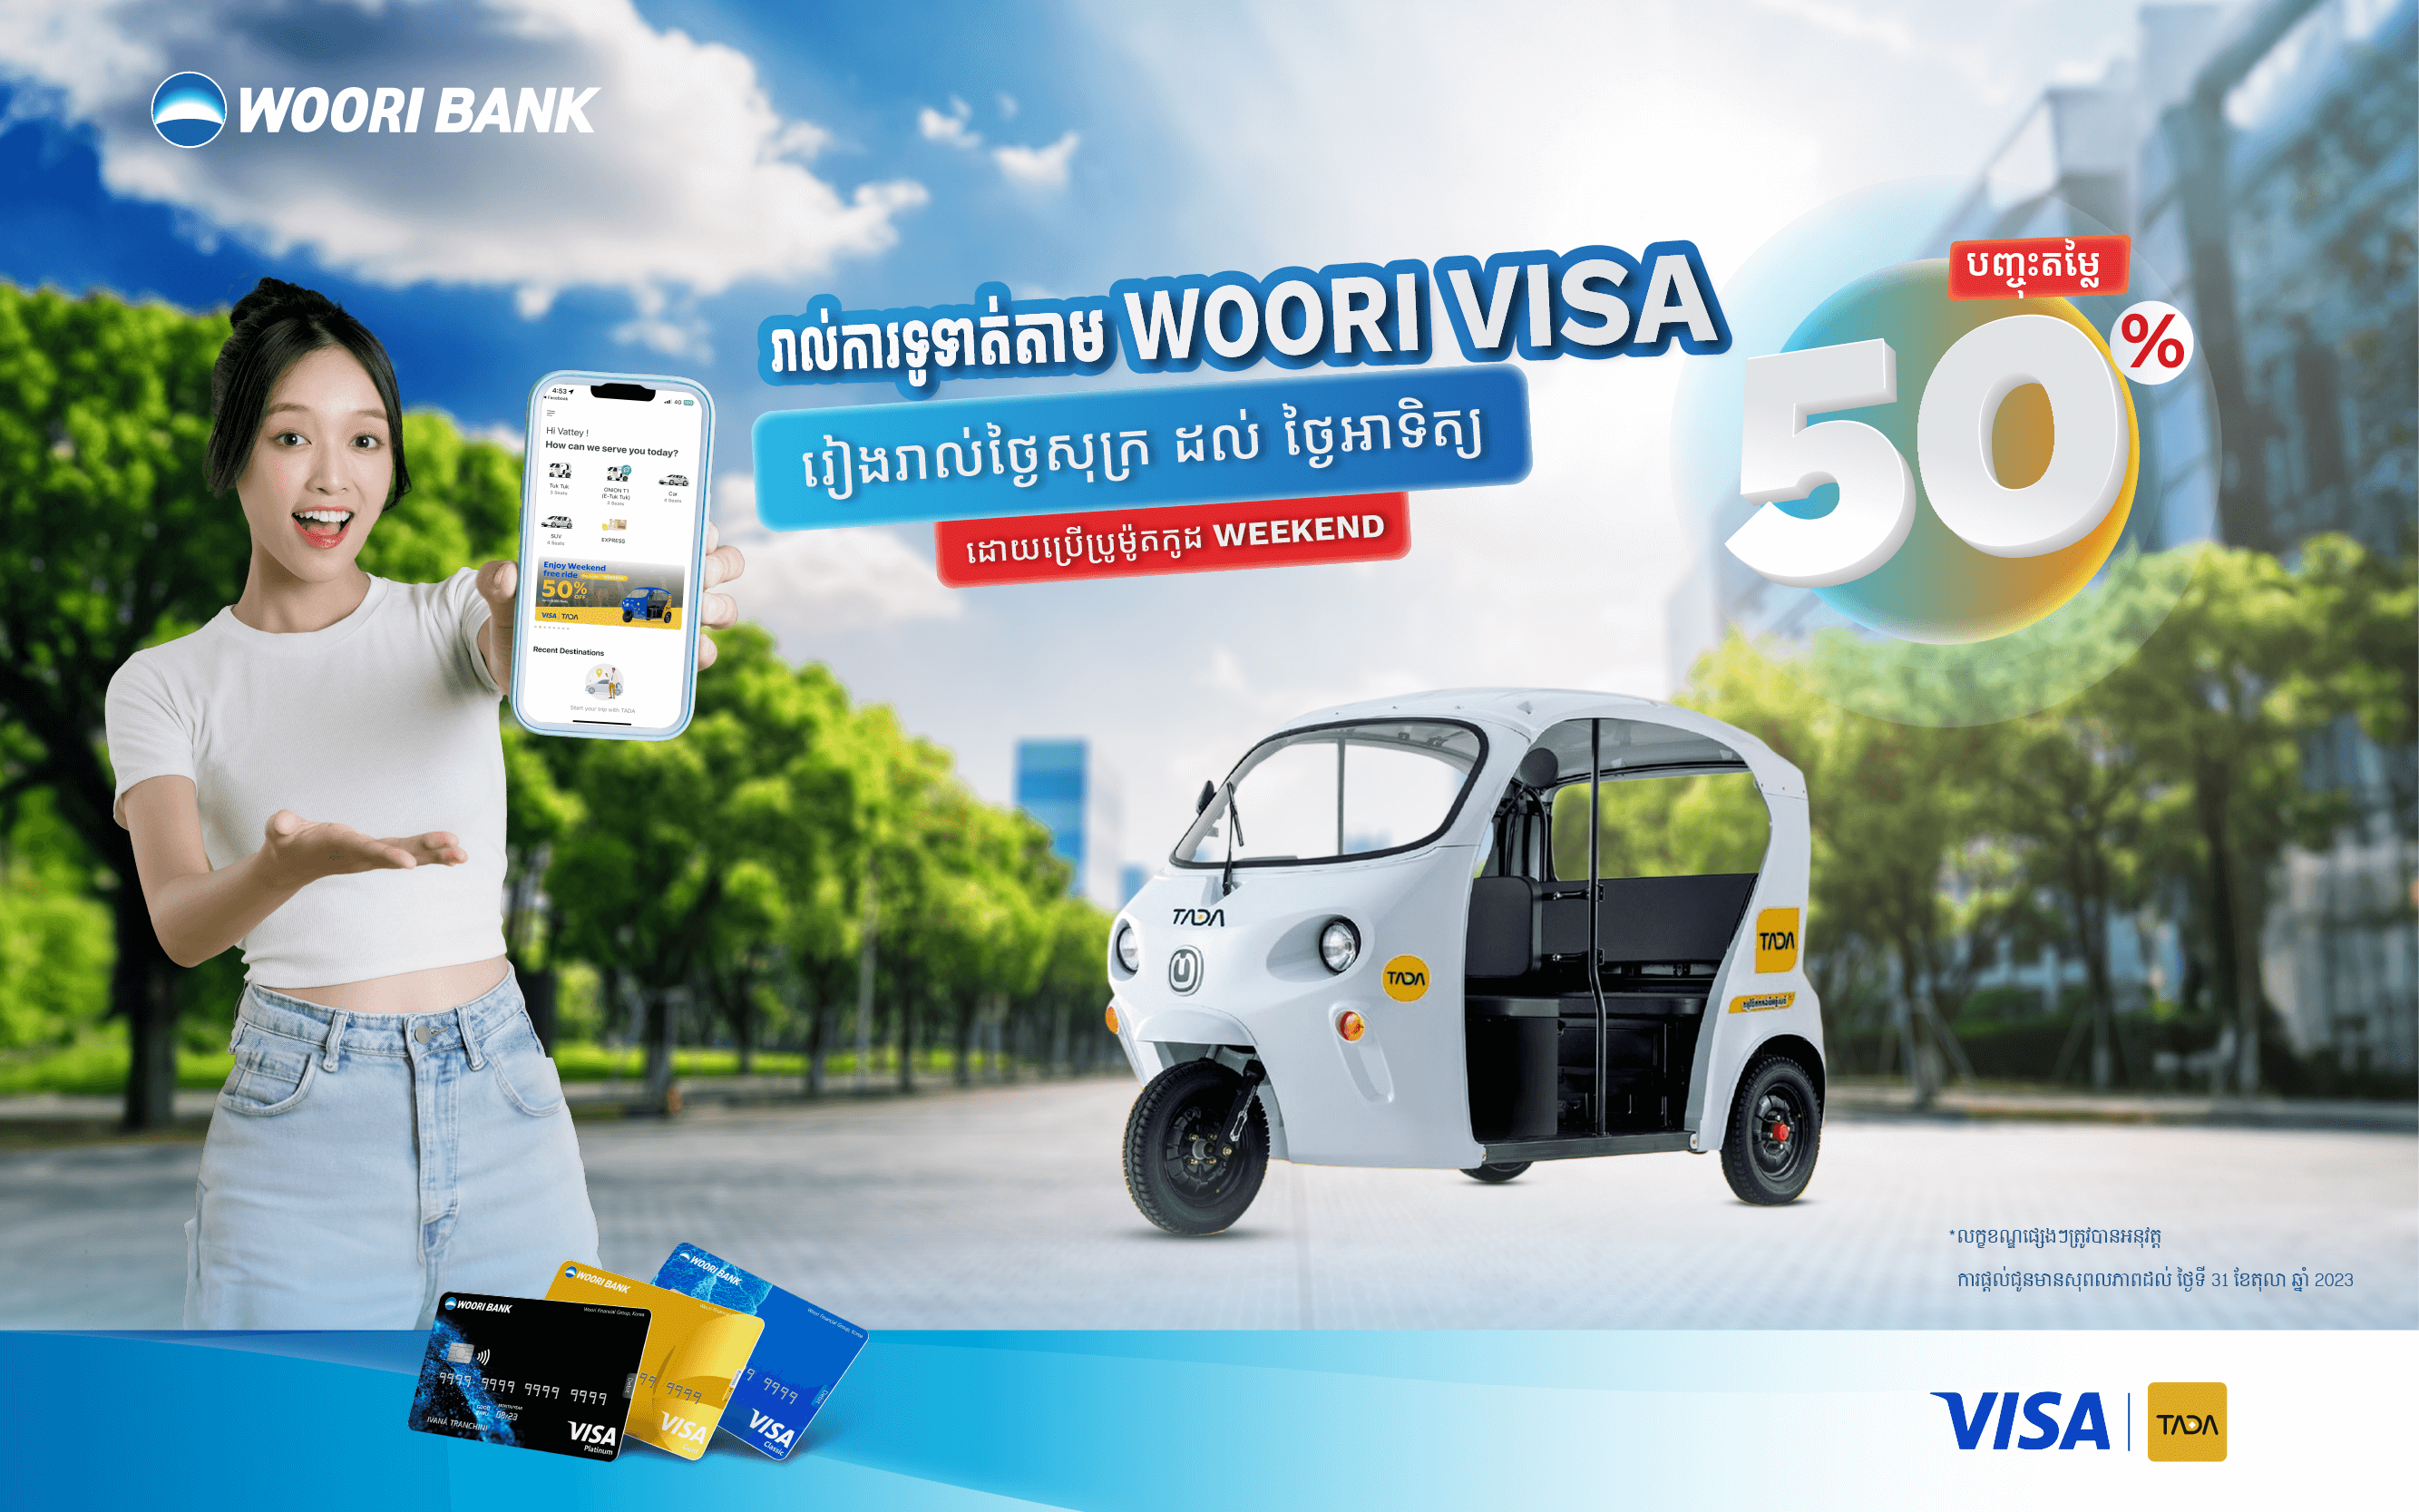 Enjoy 50% off every Friday, Saturday and Sunday with Woori Visa Card!